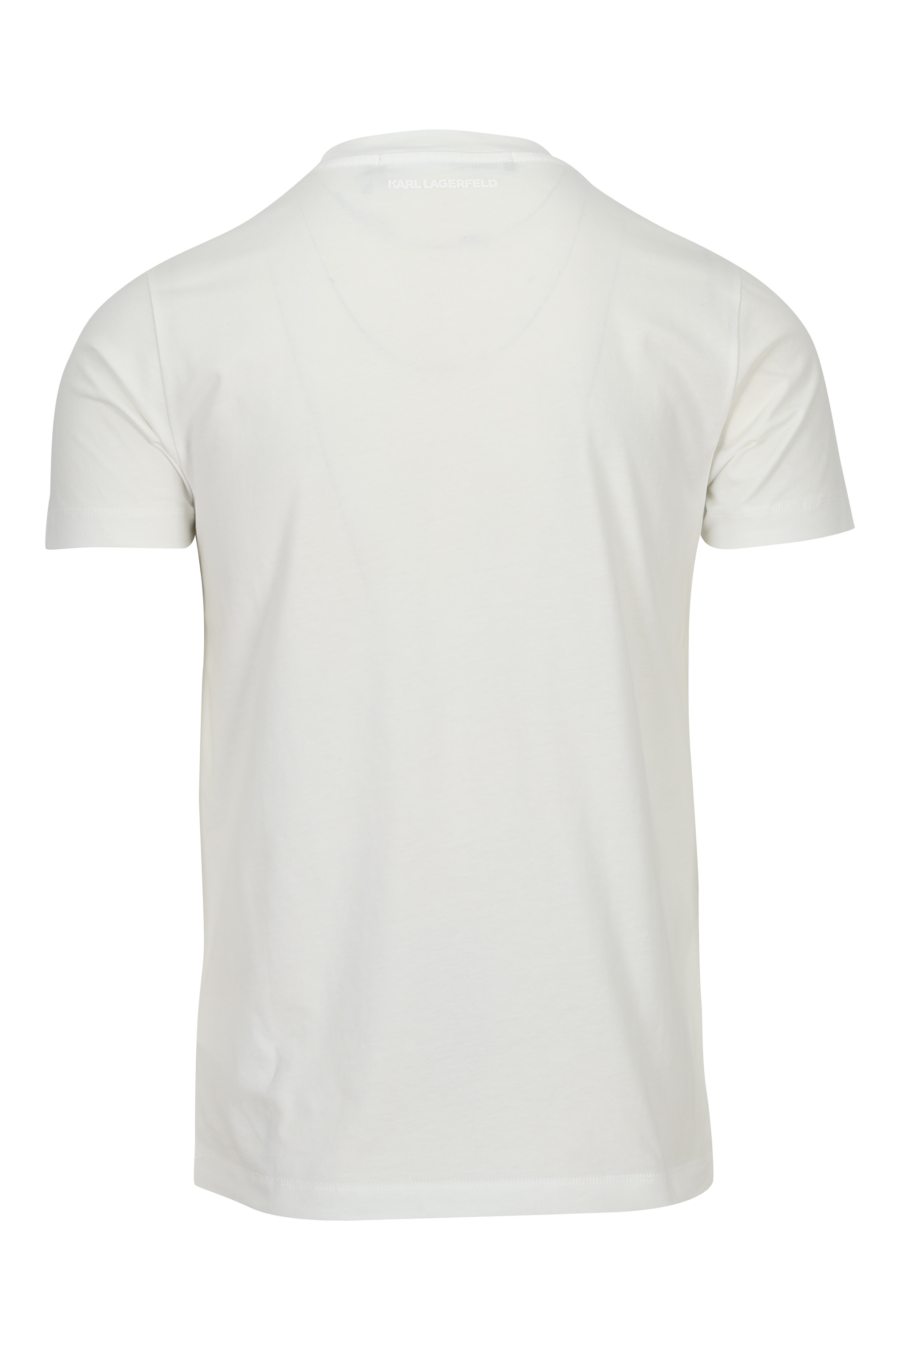 Camiseta blanca con maxilogo "karl" negro - 4062226967068 1